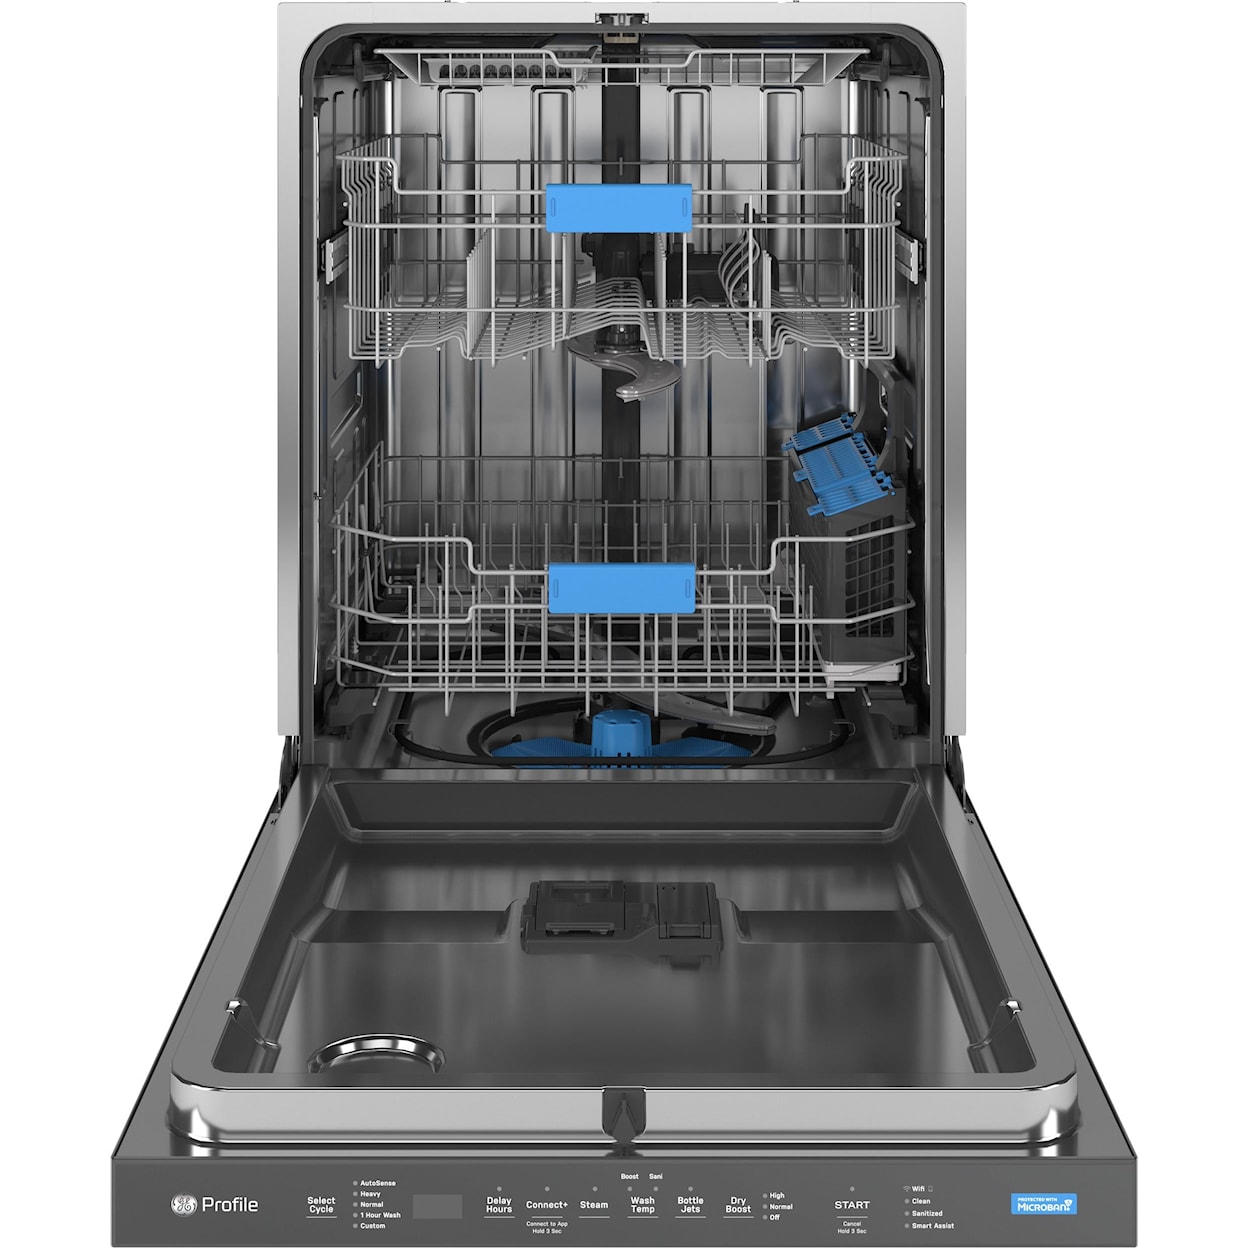 GE Appliances Dishwashers Built In Dishwasher